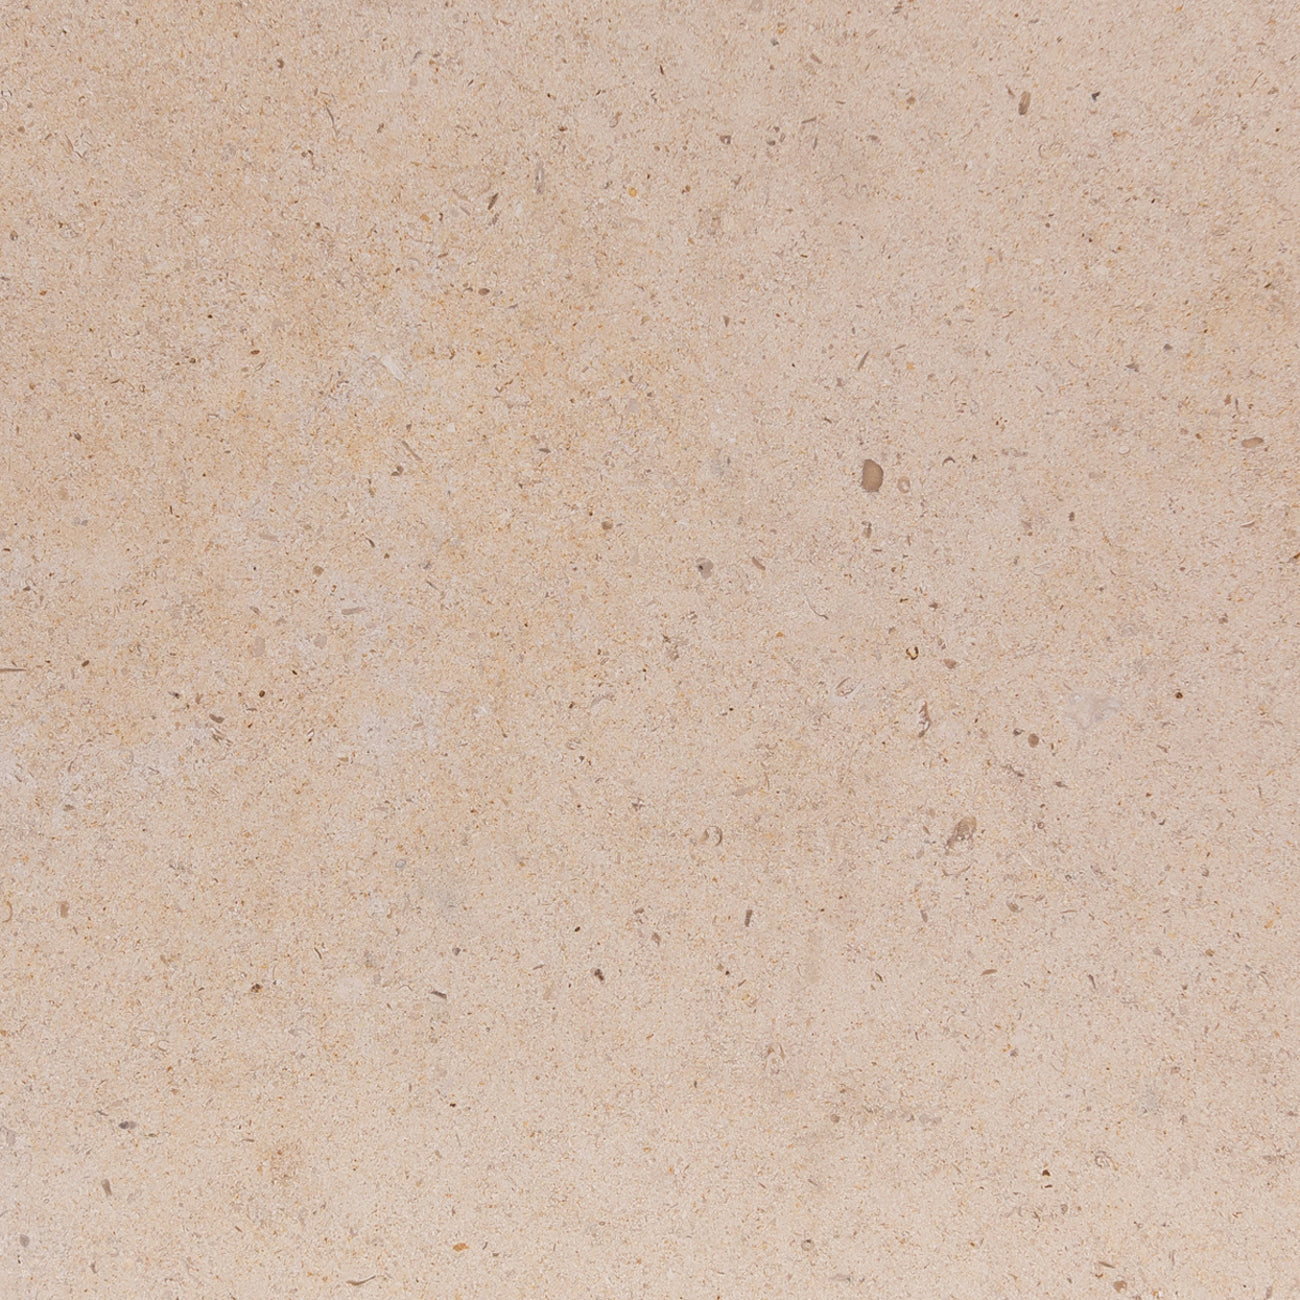 haussmann corton beige limestone square natural stone field tile 24x24 honed